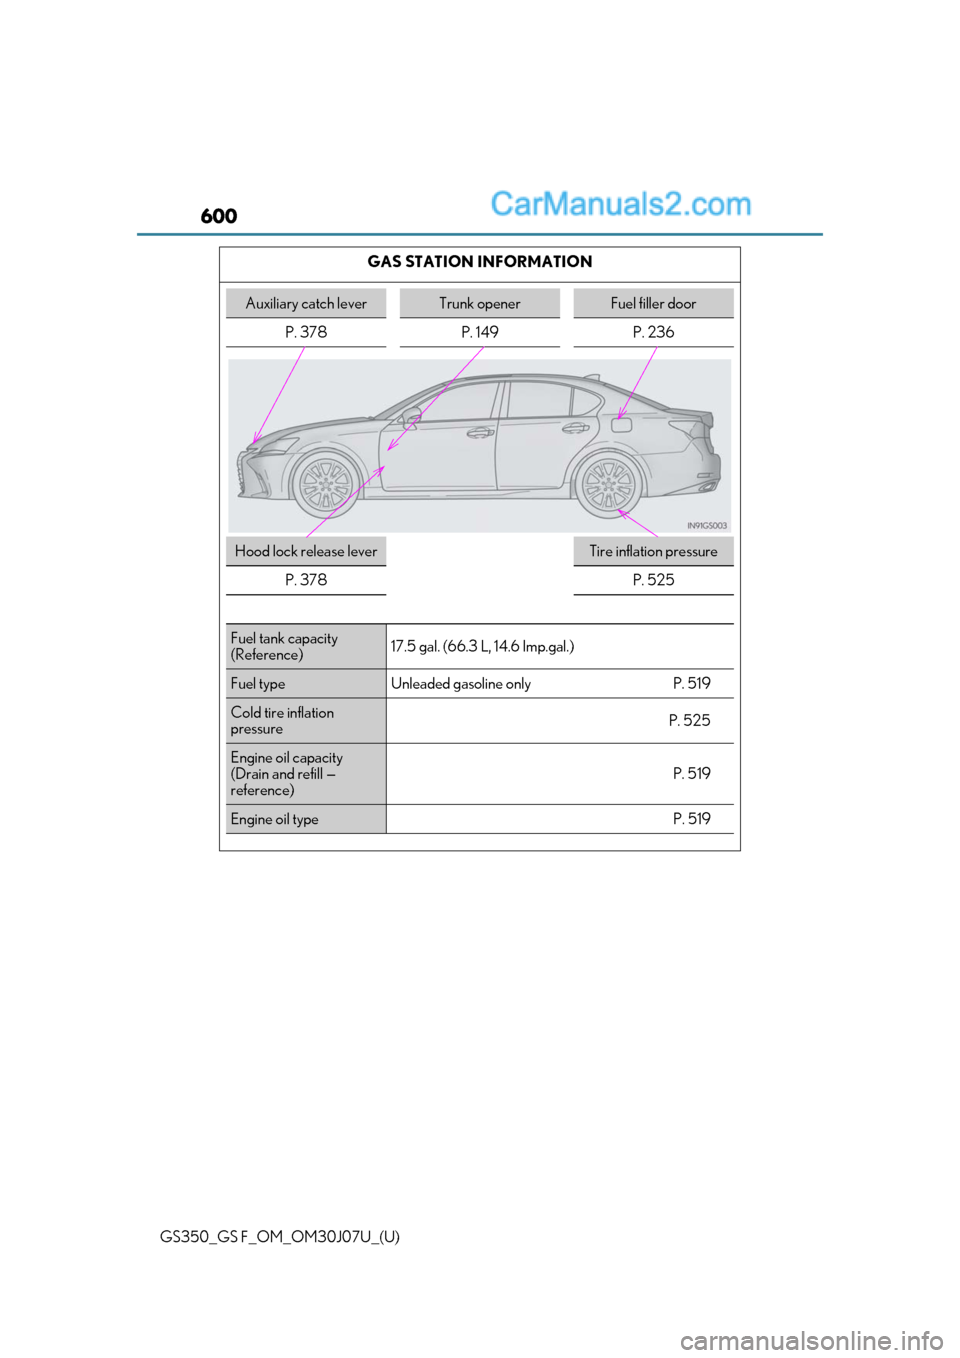 Lexus GS350 2020  Owners Manual 600
GS350_GS F_OM_OM30J07U_(U)GAS STATION INFORMATION
Auxiliary catch leverTrunk openerFuel filler door
P. 378 P. 149 P. 236
Hood lock release leverTire inflation pressure
P. 378
P. 525
Fuel tank capa